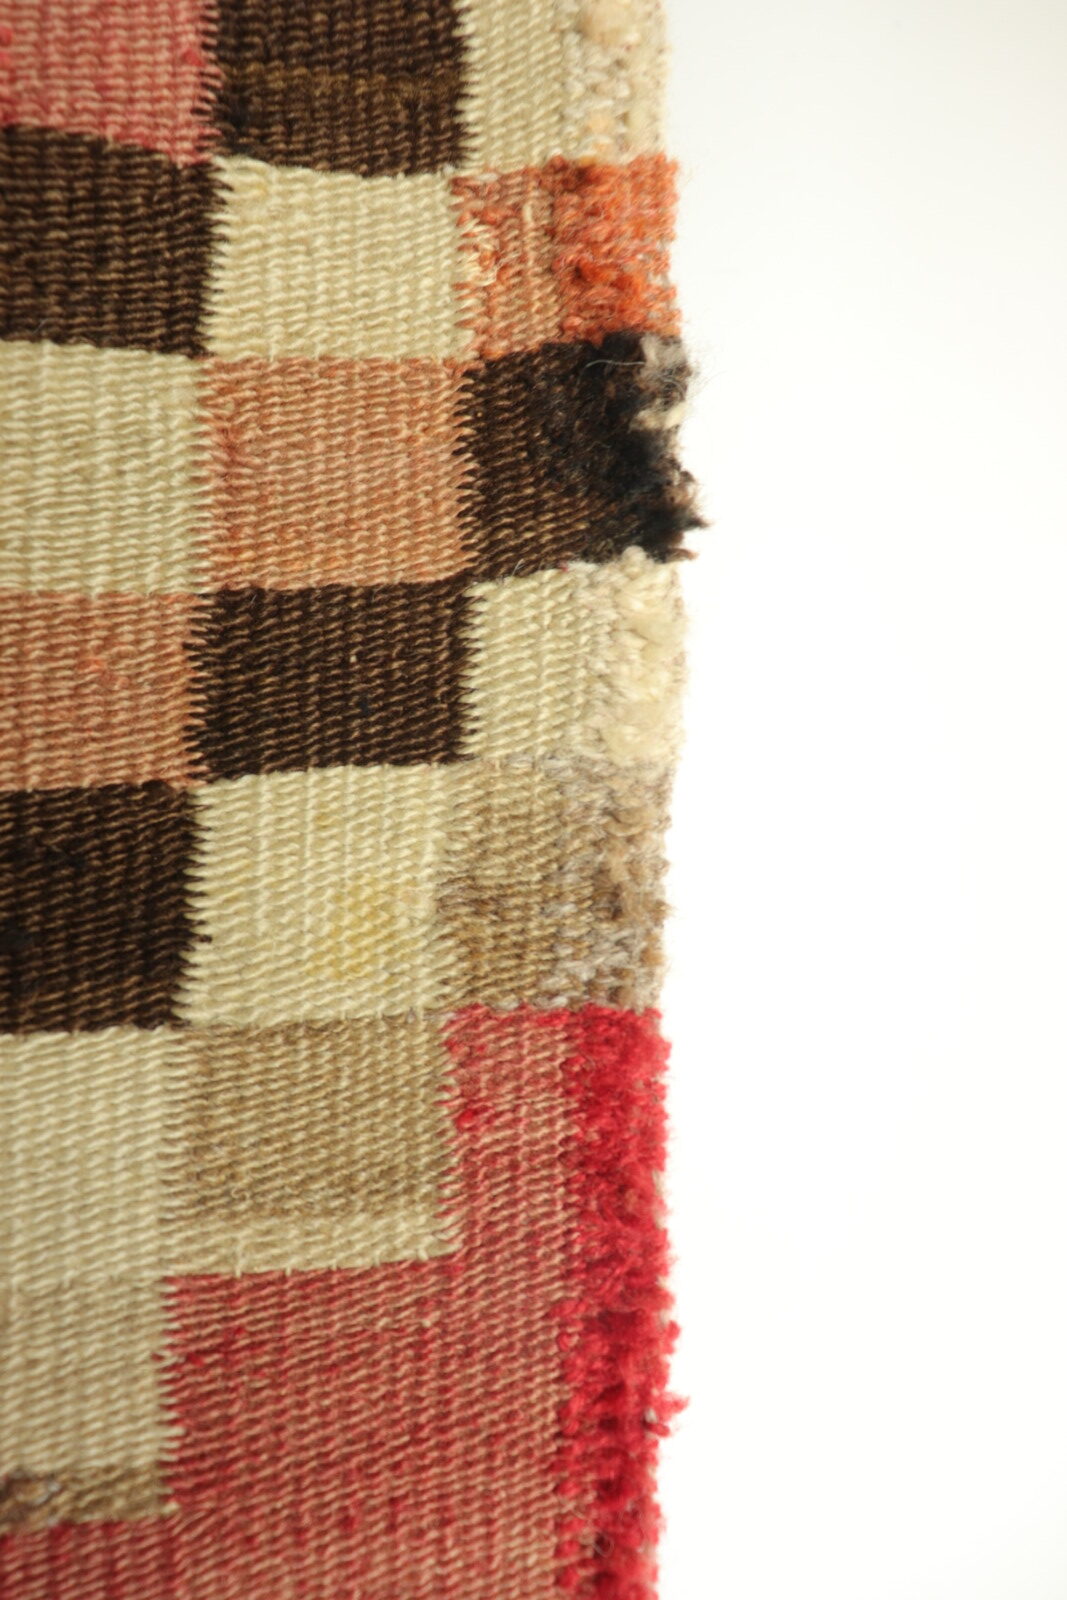 ~1920's,transitional blanket,navajo rug,antique,USA